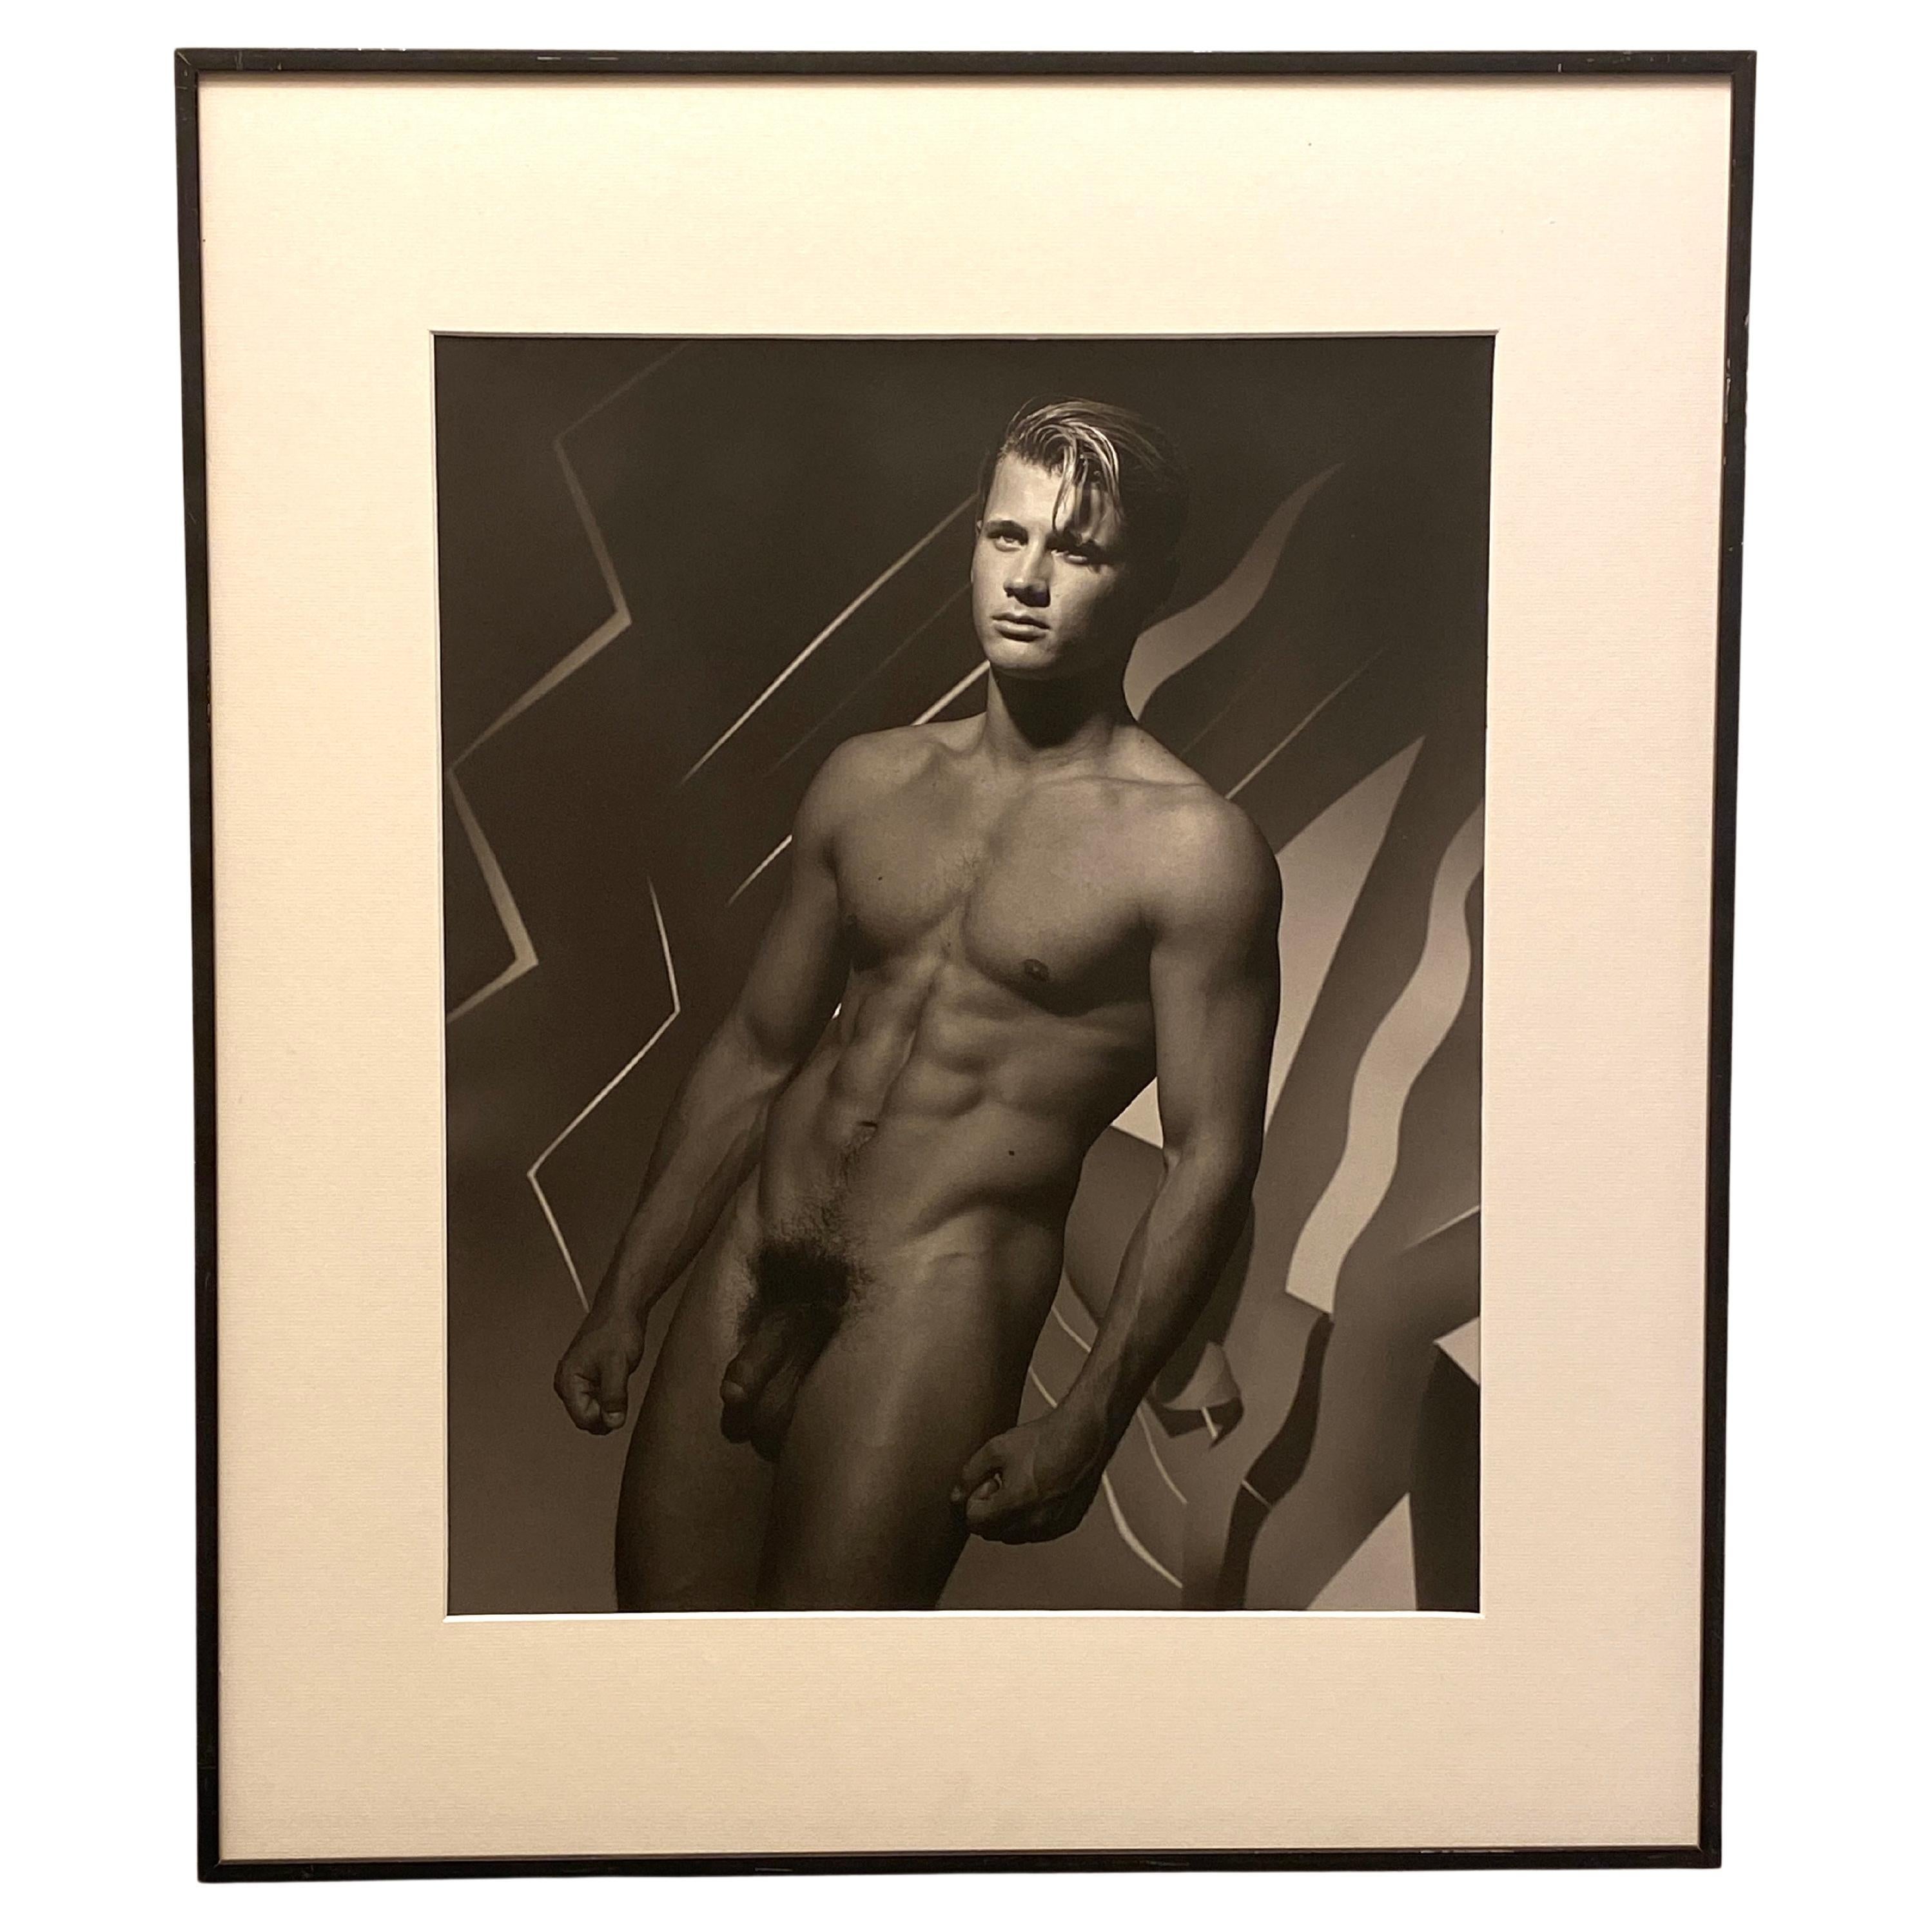 Michael Roberts Original Photograph "Michel Nude" Hamilton's London, 1989 For Sale